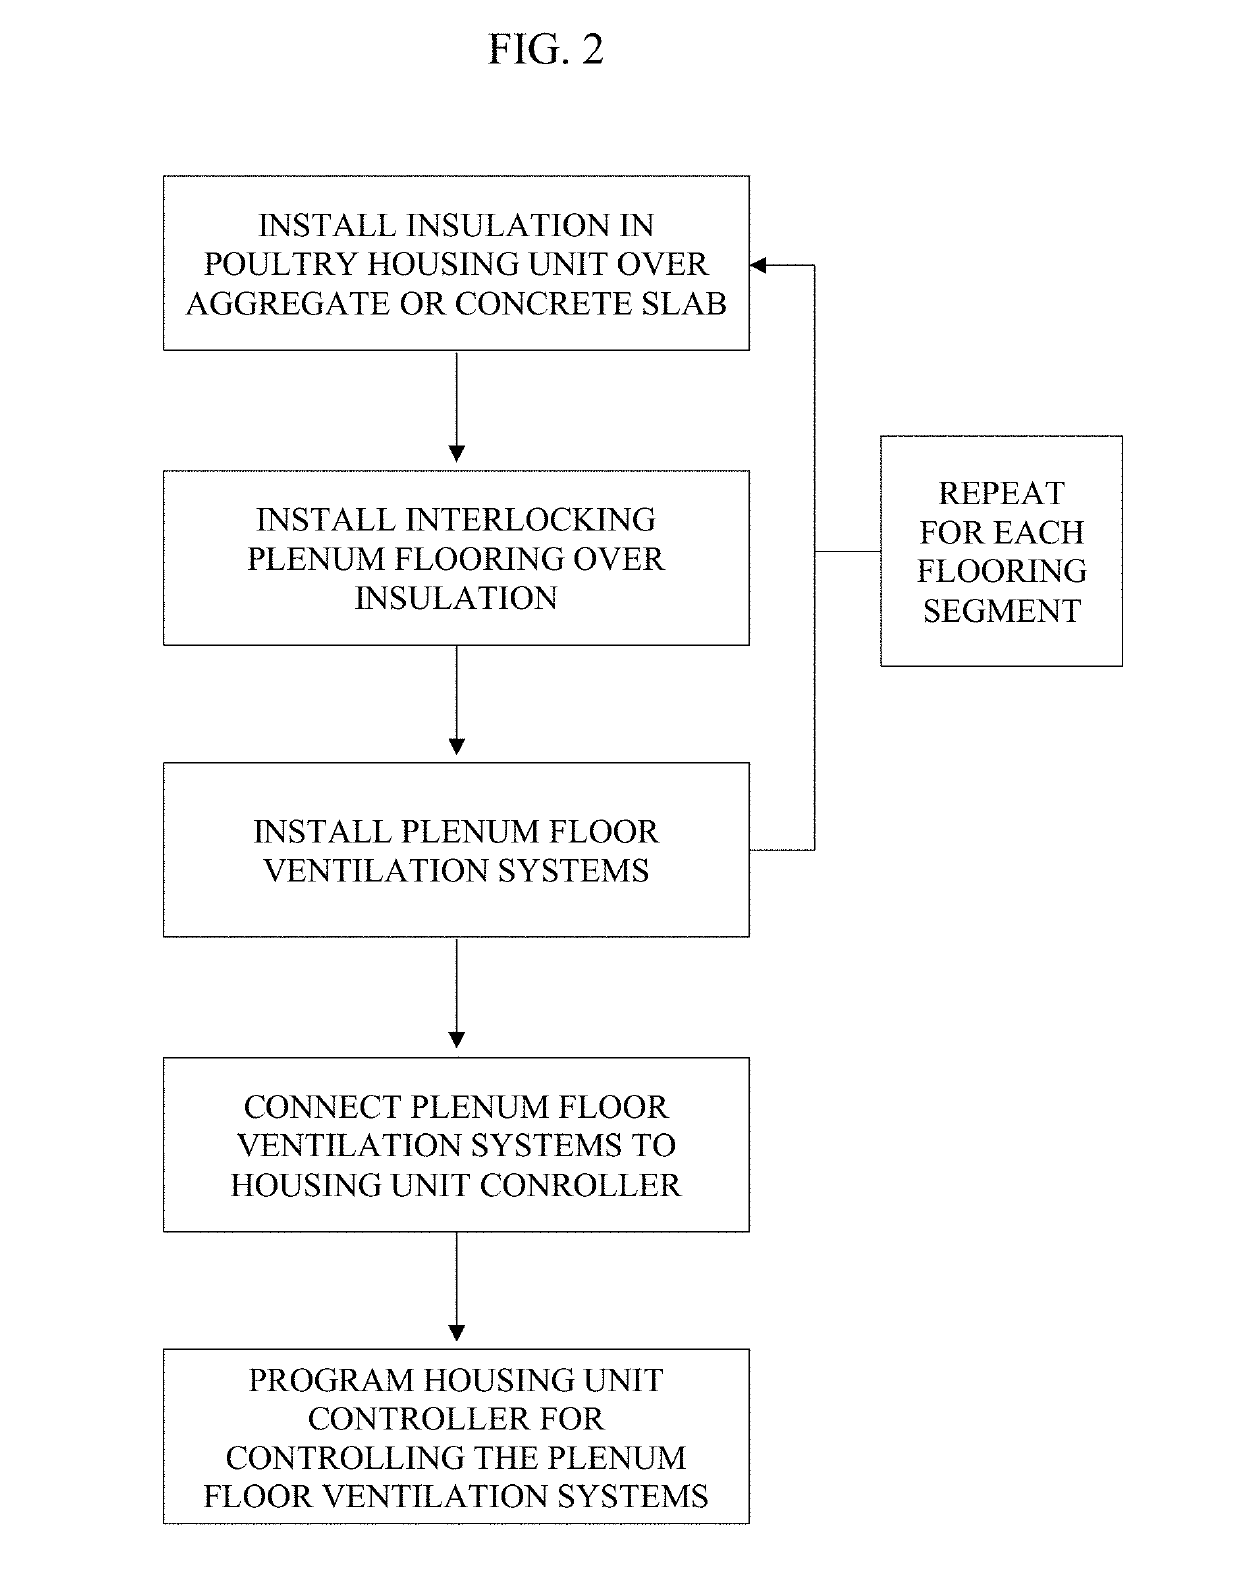 Poultry housing unit plenum flooring ventilation system and method